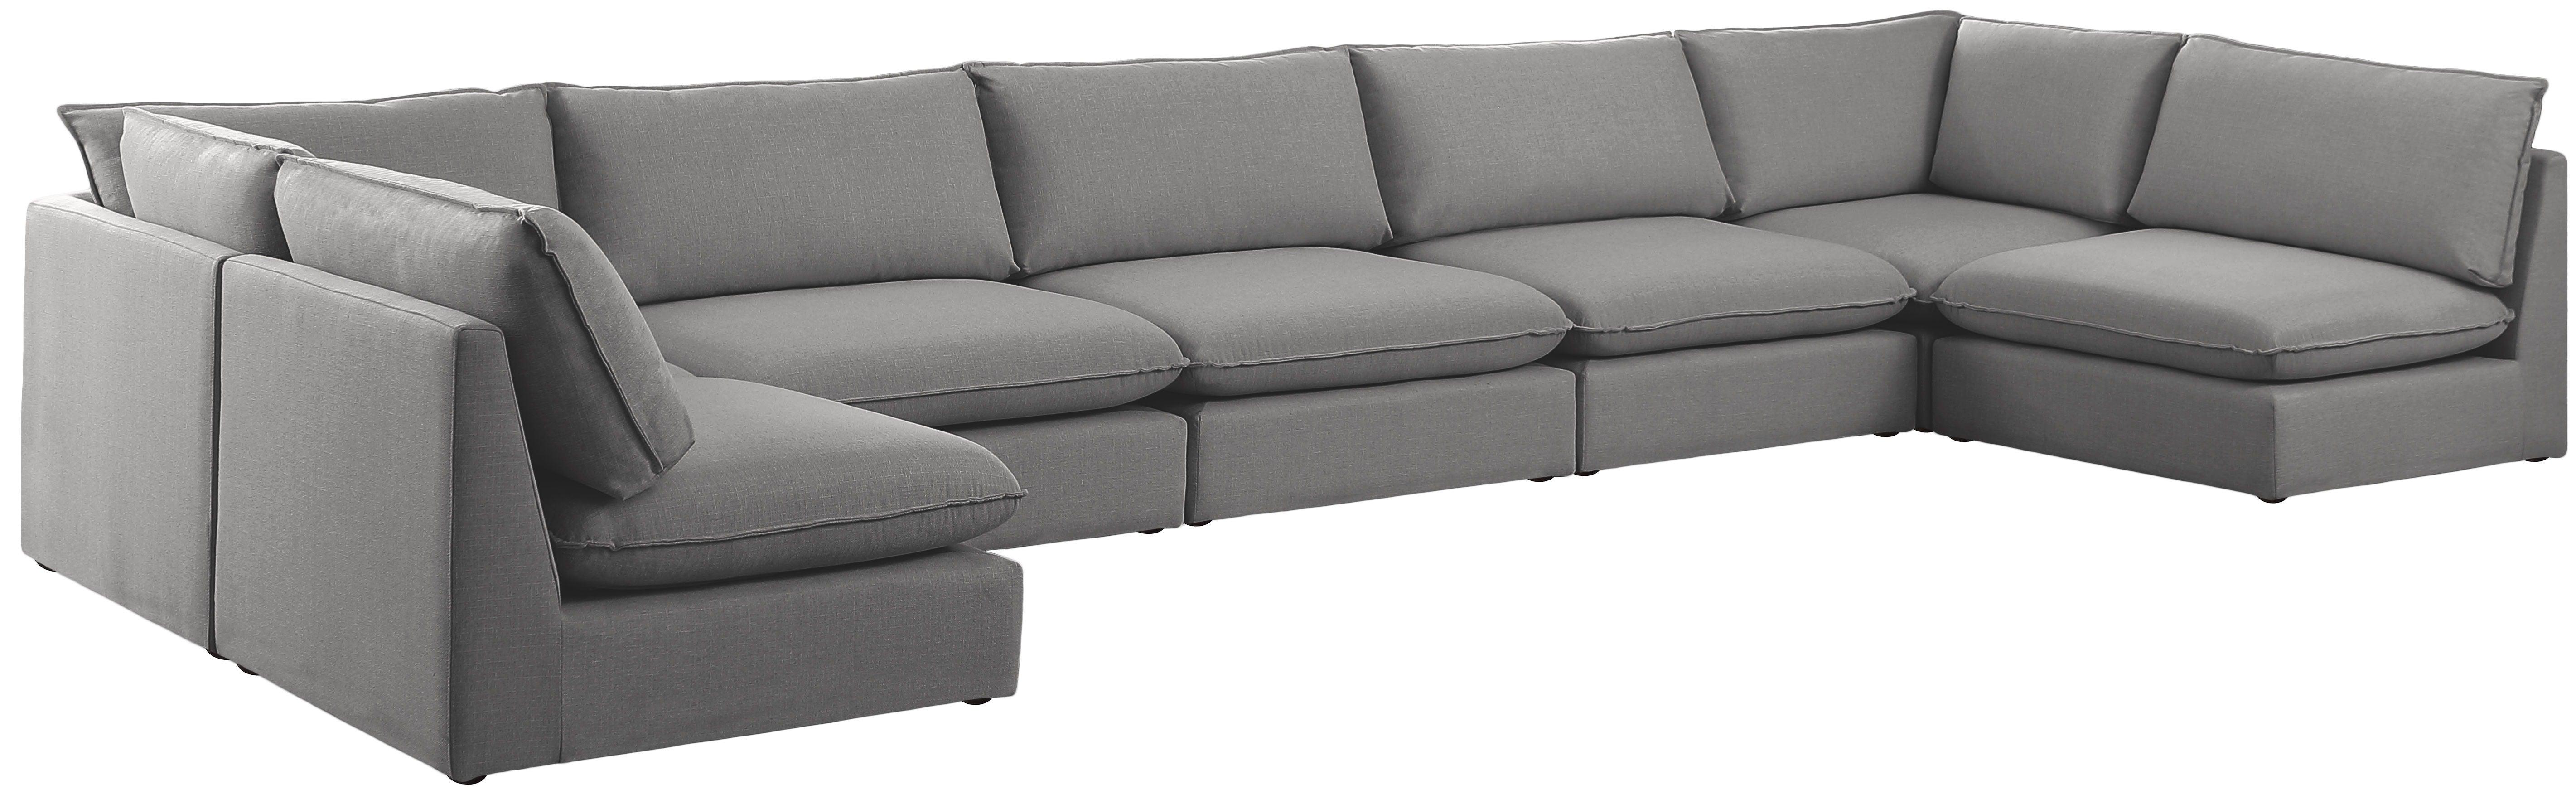 Meridian Furniture - Mackenzie - Modular Sectional 7 Piece - Gray - Fabric - 5th Avenue Furniture